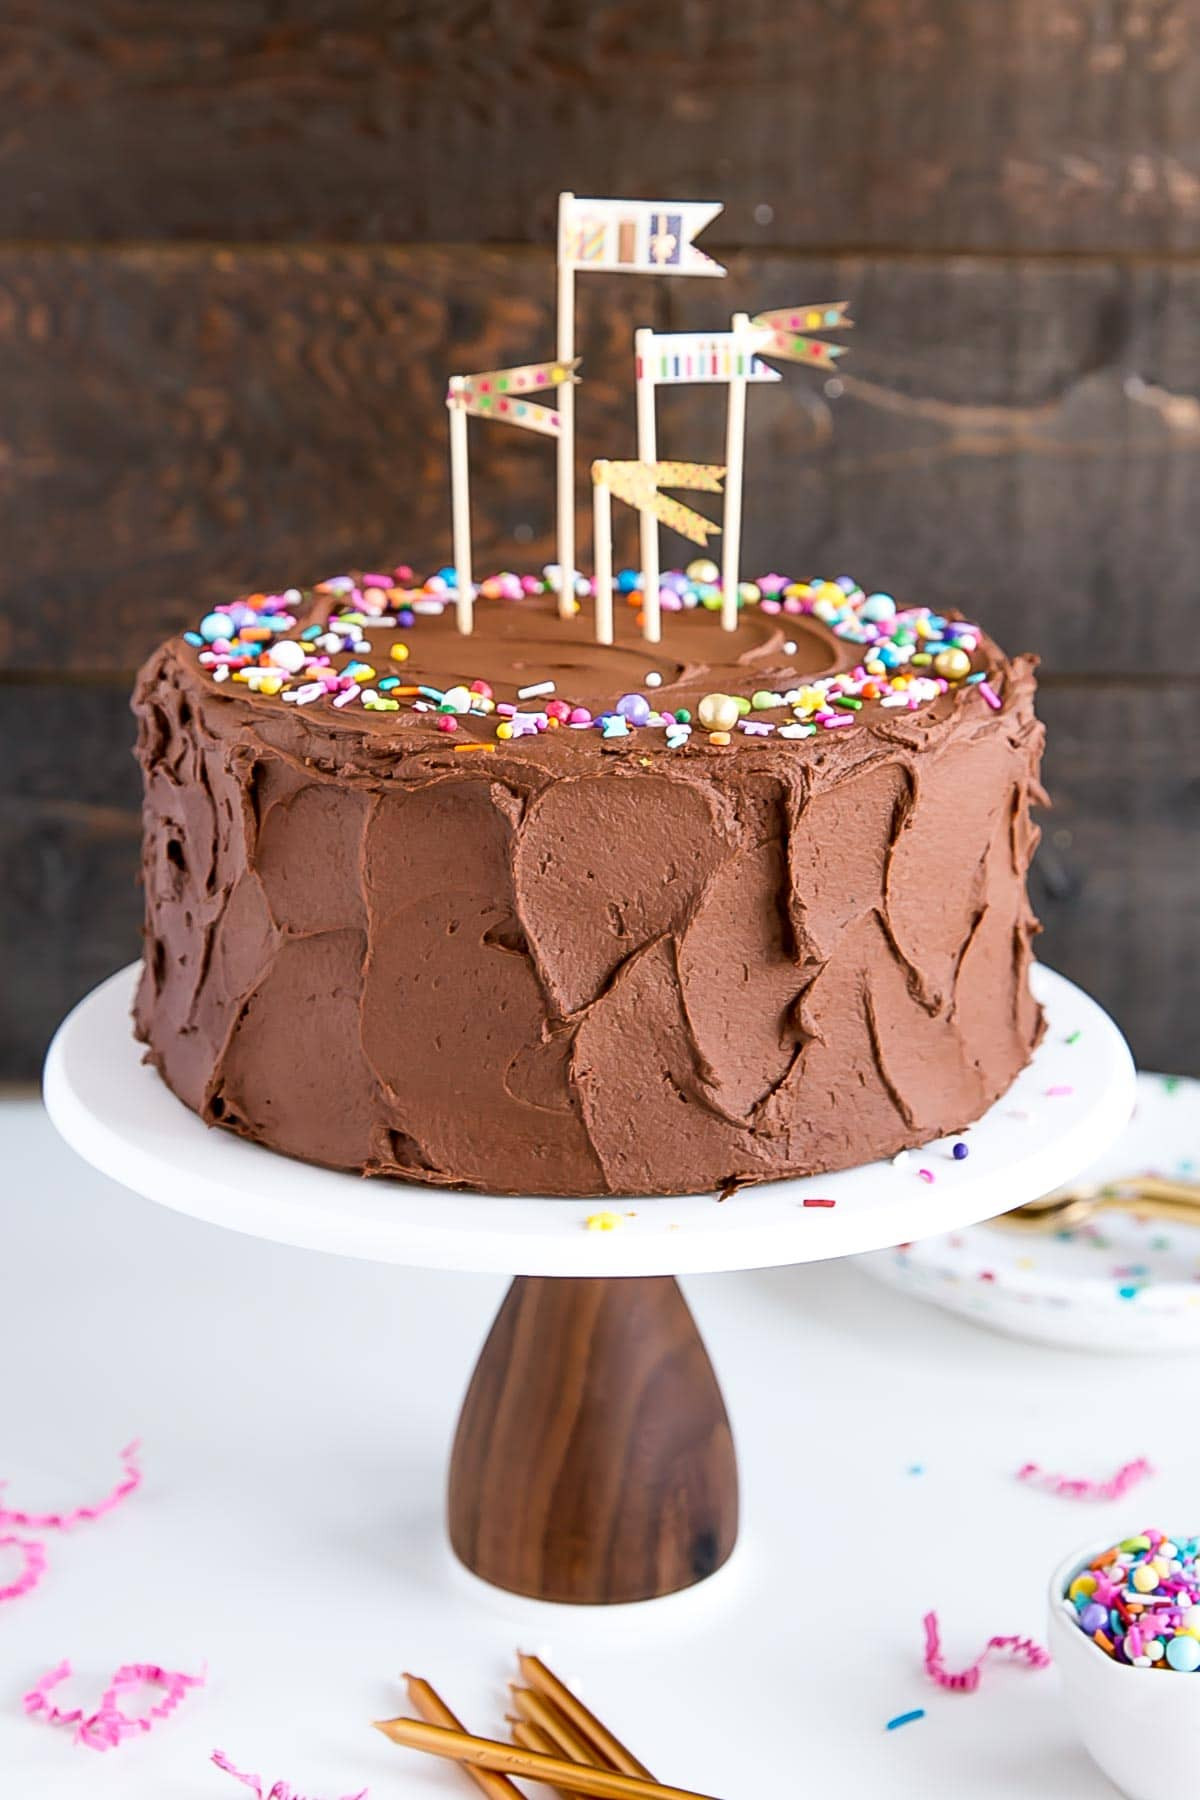 Images Of A Birthday Cake
 18 Fun Birthday Cake Inspired Desserts